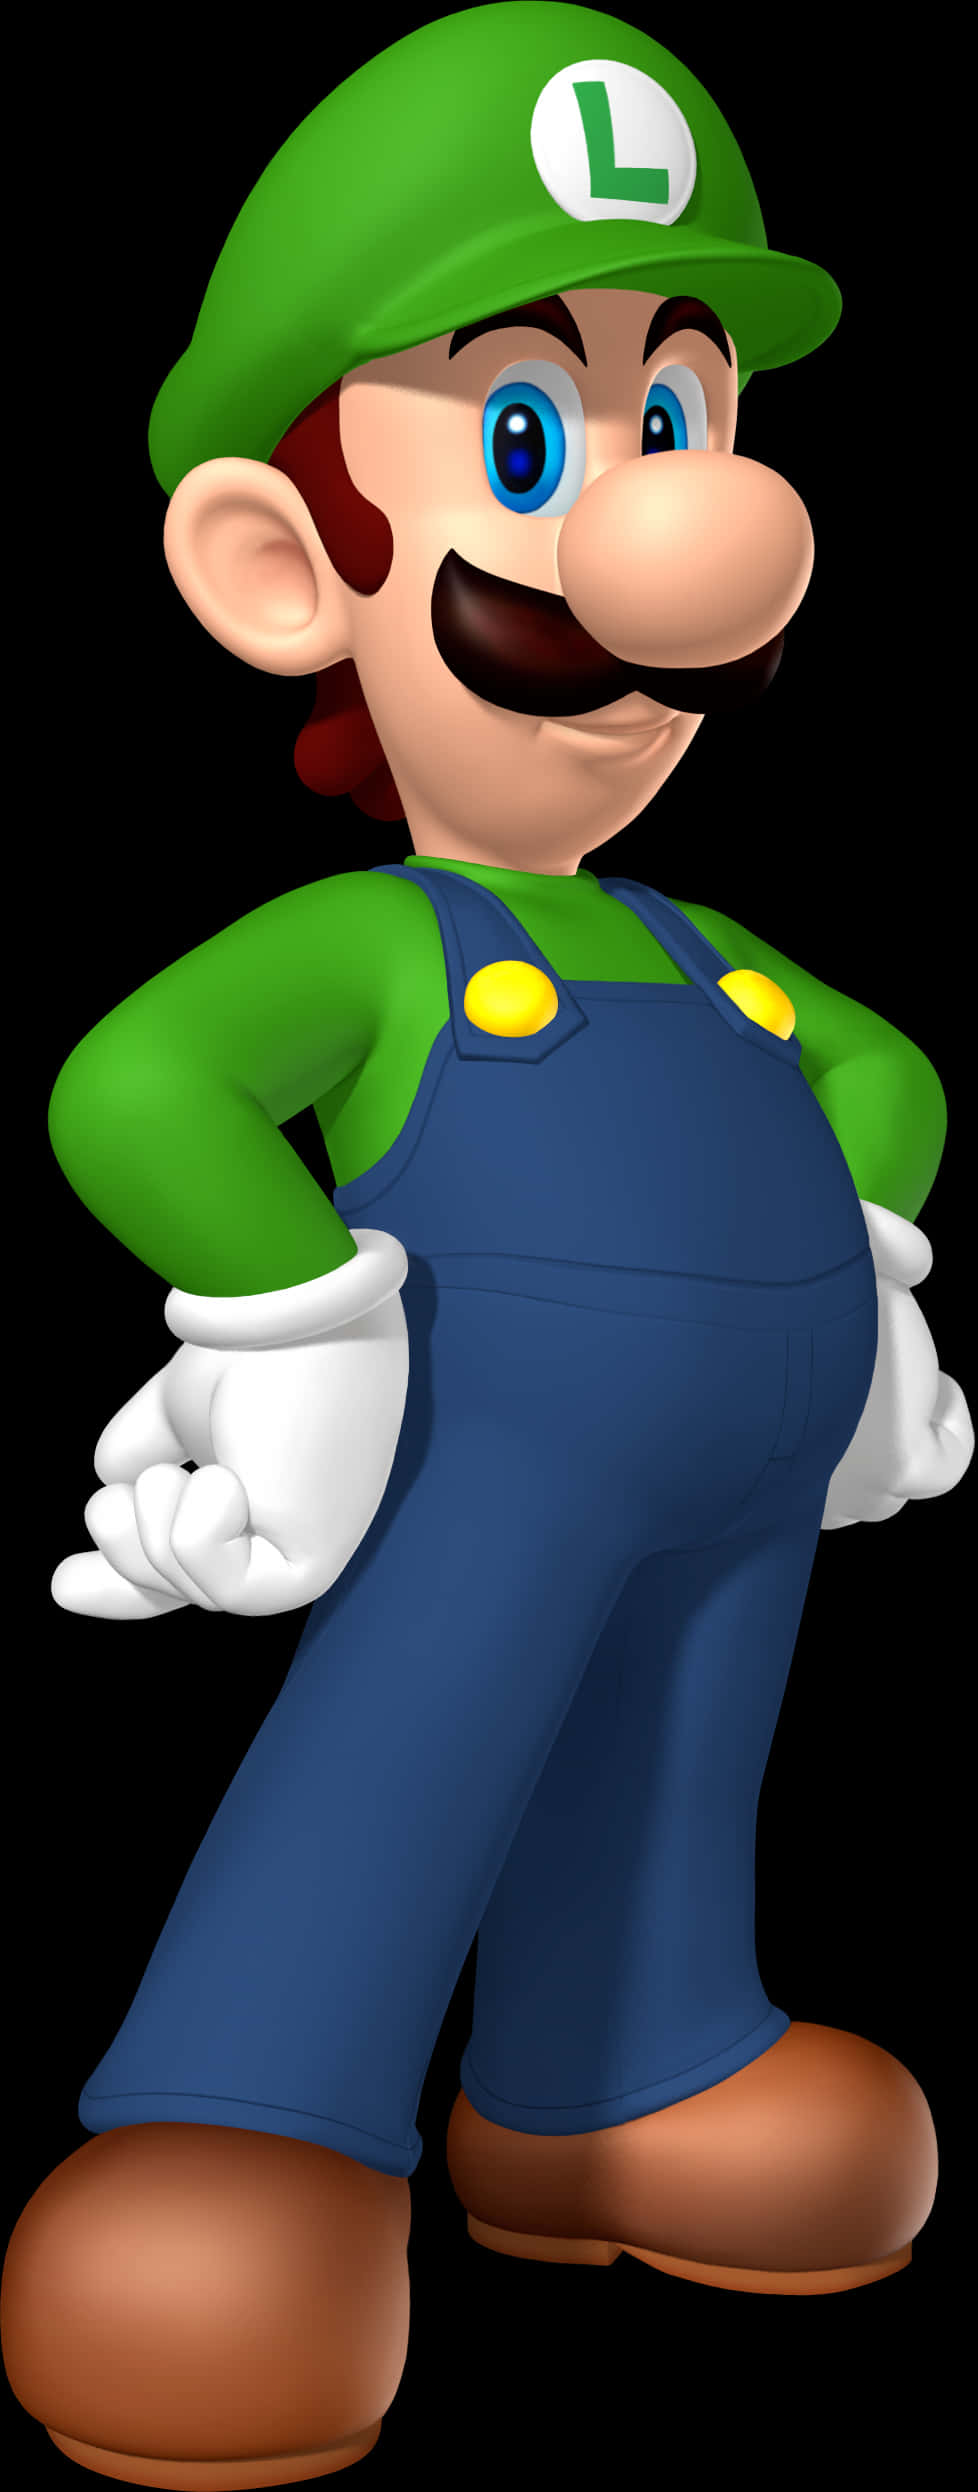 Luigi Classic Video Game Character